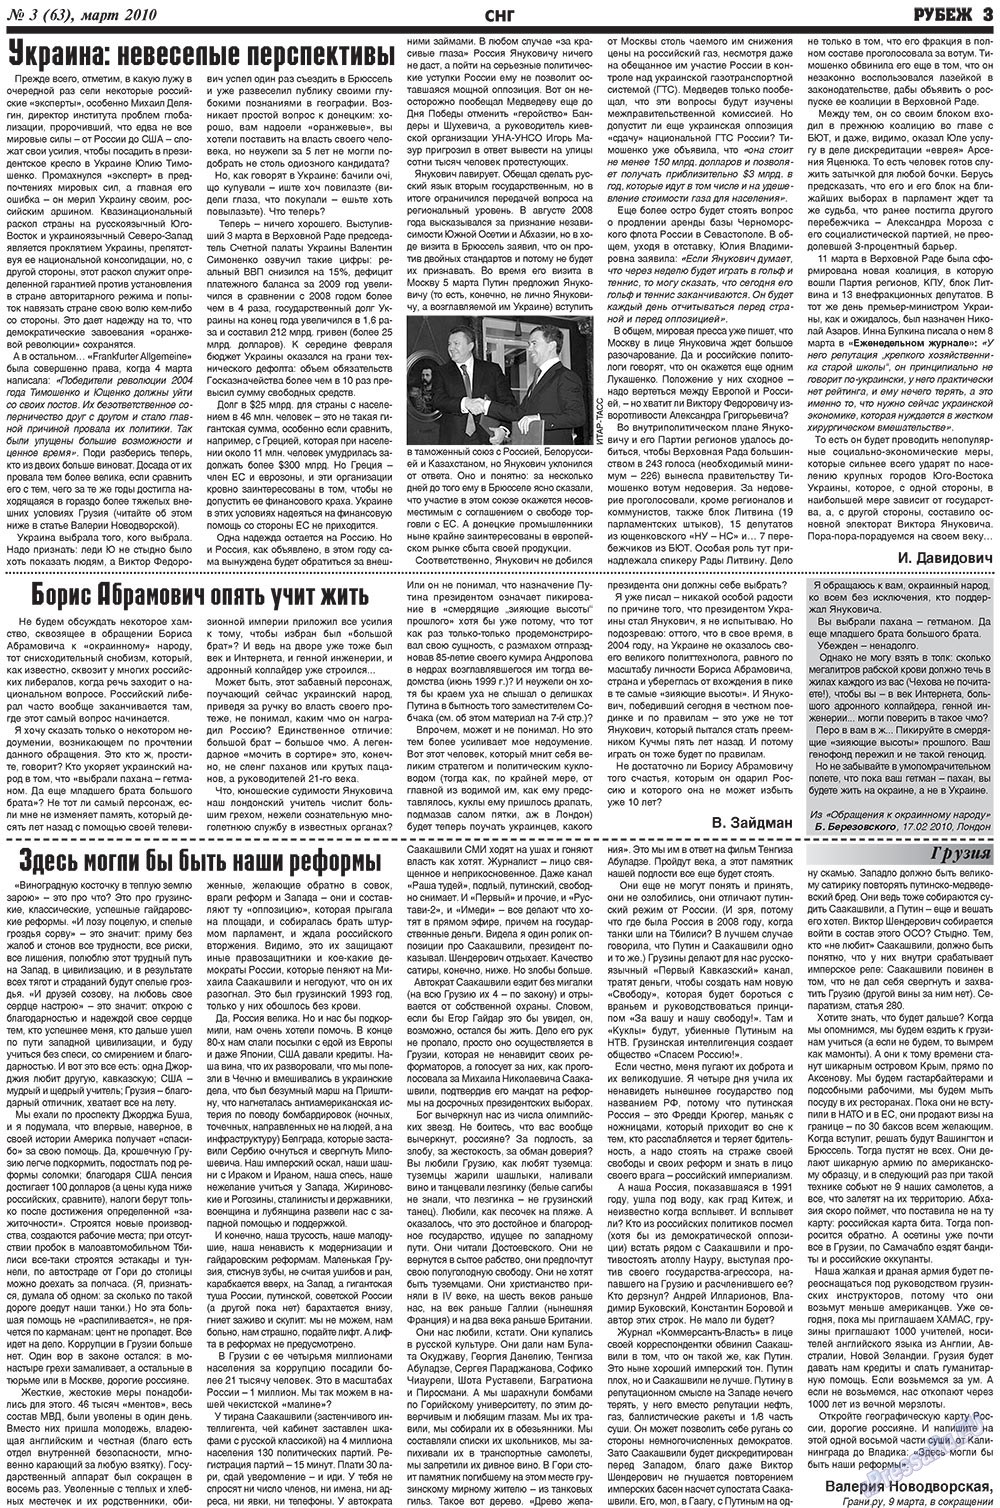 Рубеж, газета. 2010 №3 стр.3